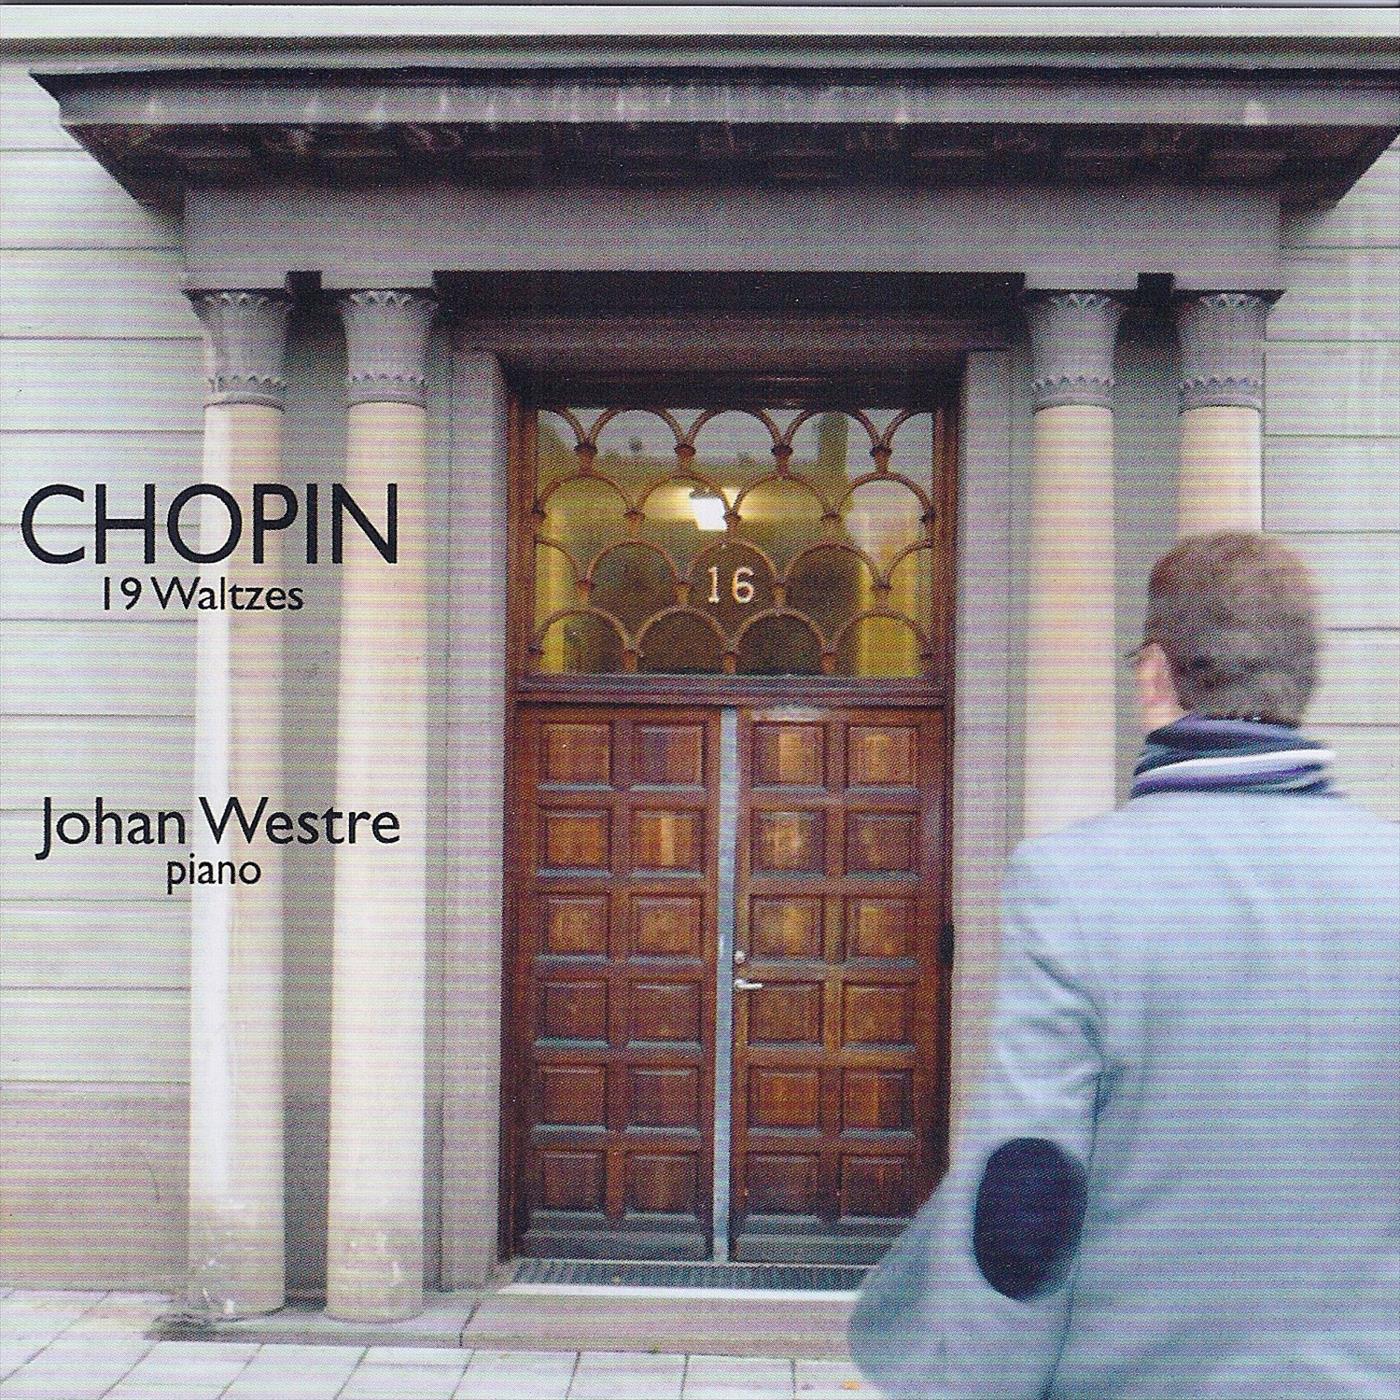 Chopin 19 Waltzes